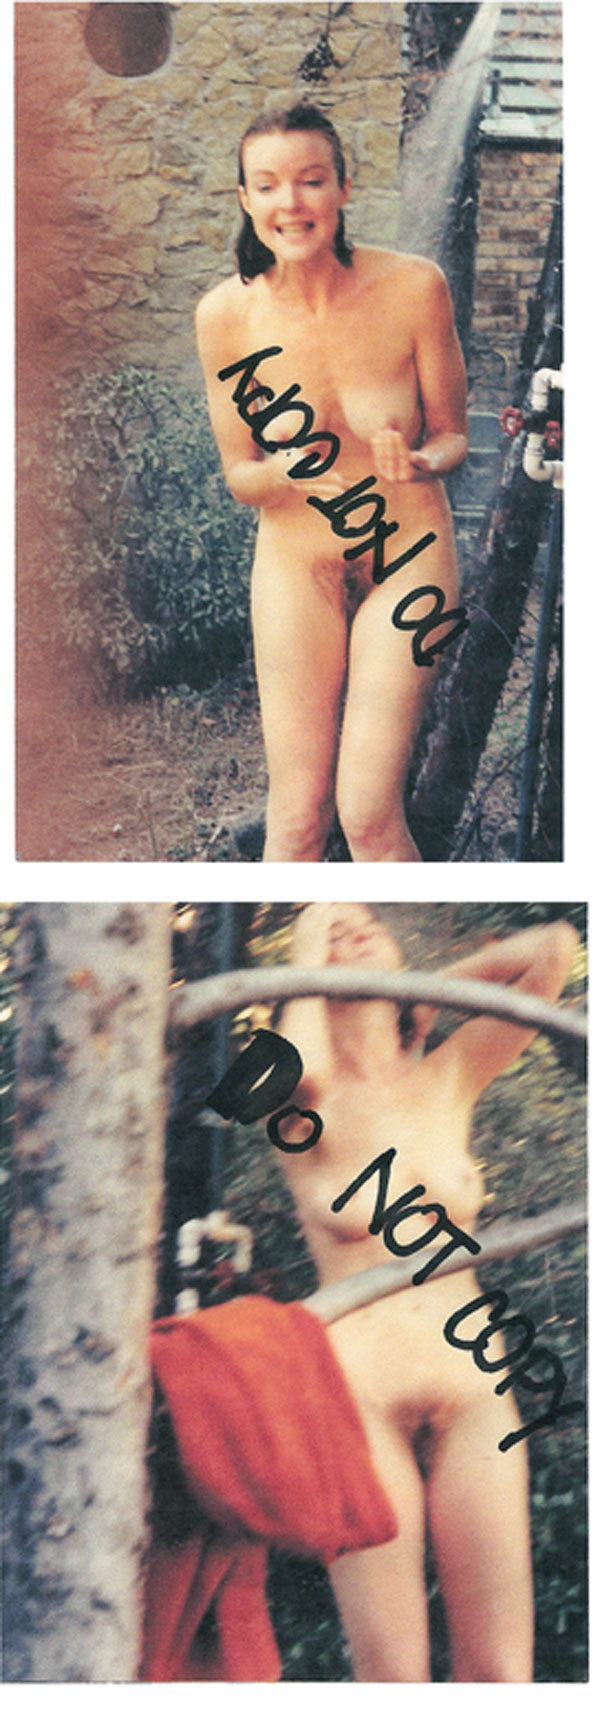 Marsha Cross Pic Nude